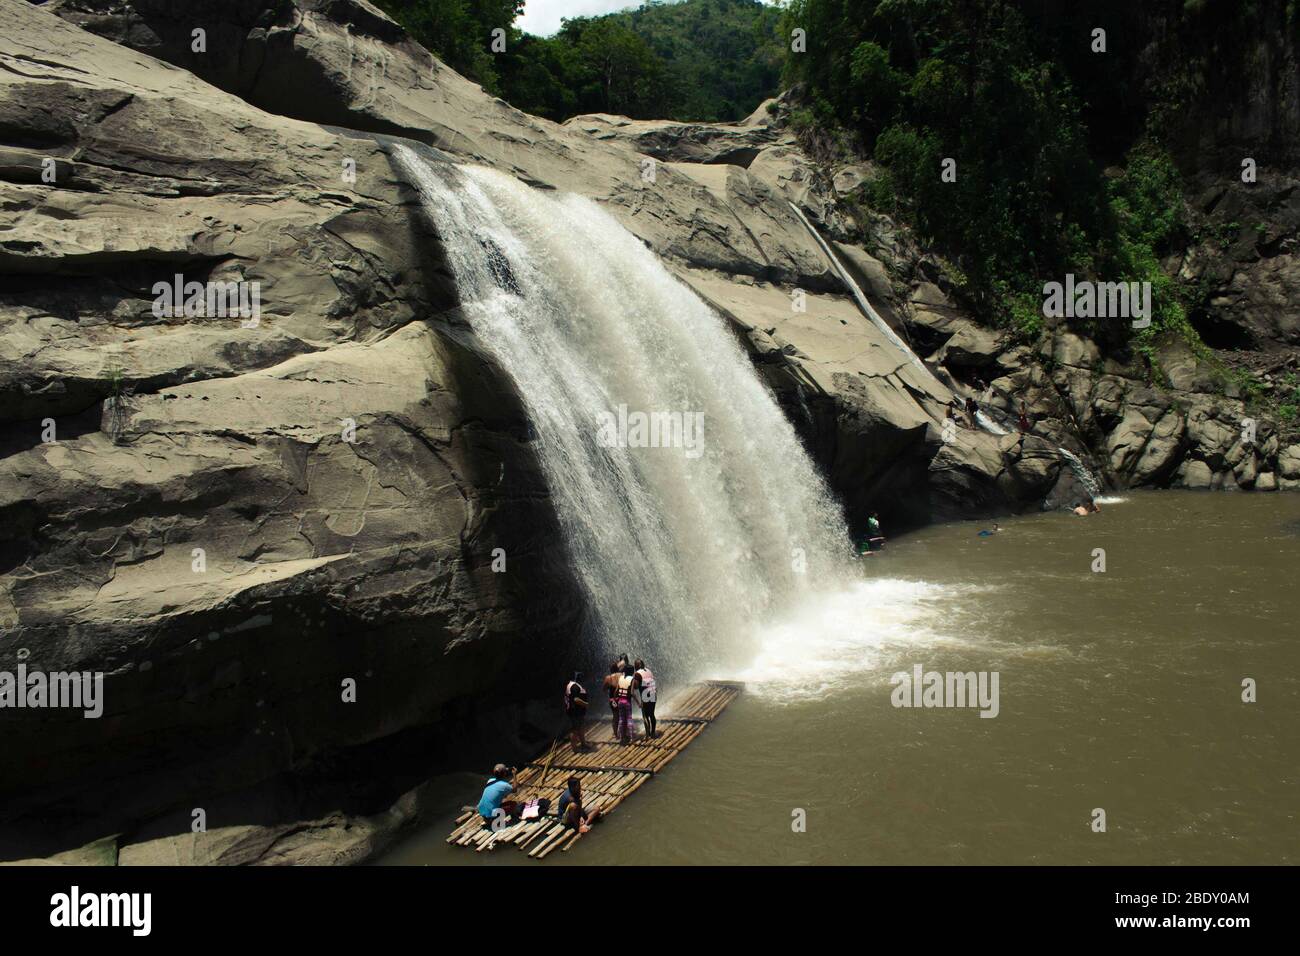 June 8, 2019-Pangasinan Philippines: scenic view of the Tangadan falls in La Union Philippines Stock Photo